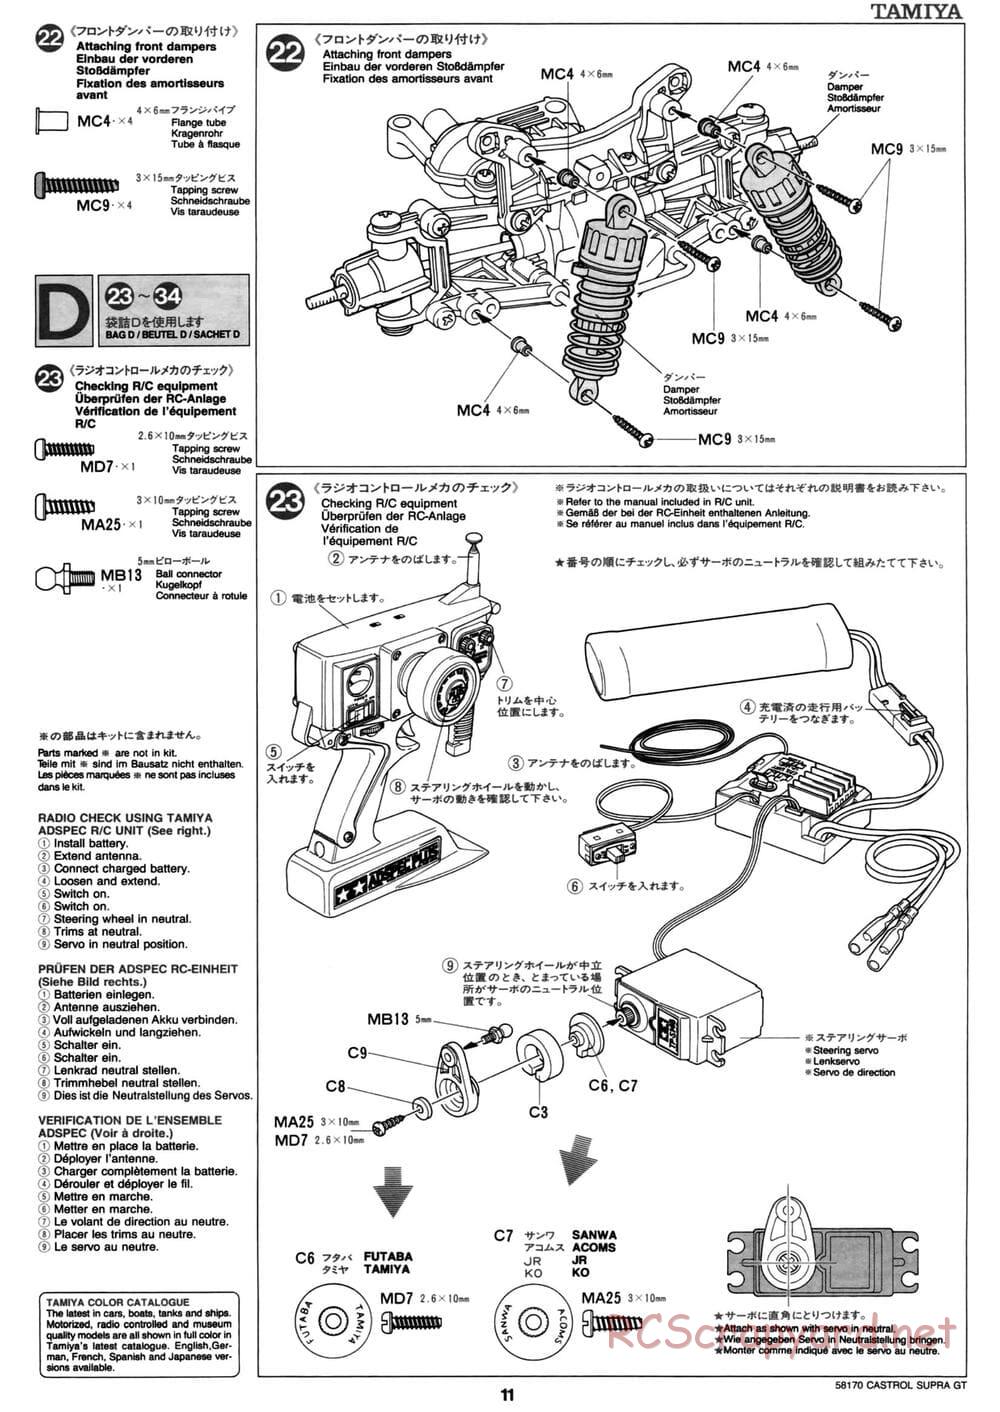 Tamiya - Castrol Toyota Tom's Supra GT - TA-02W Chassis - Manual - Page 11